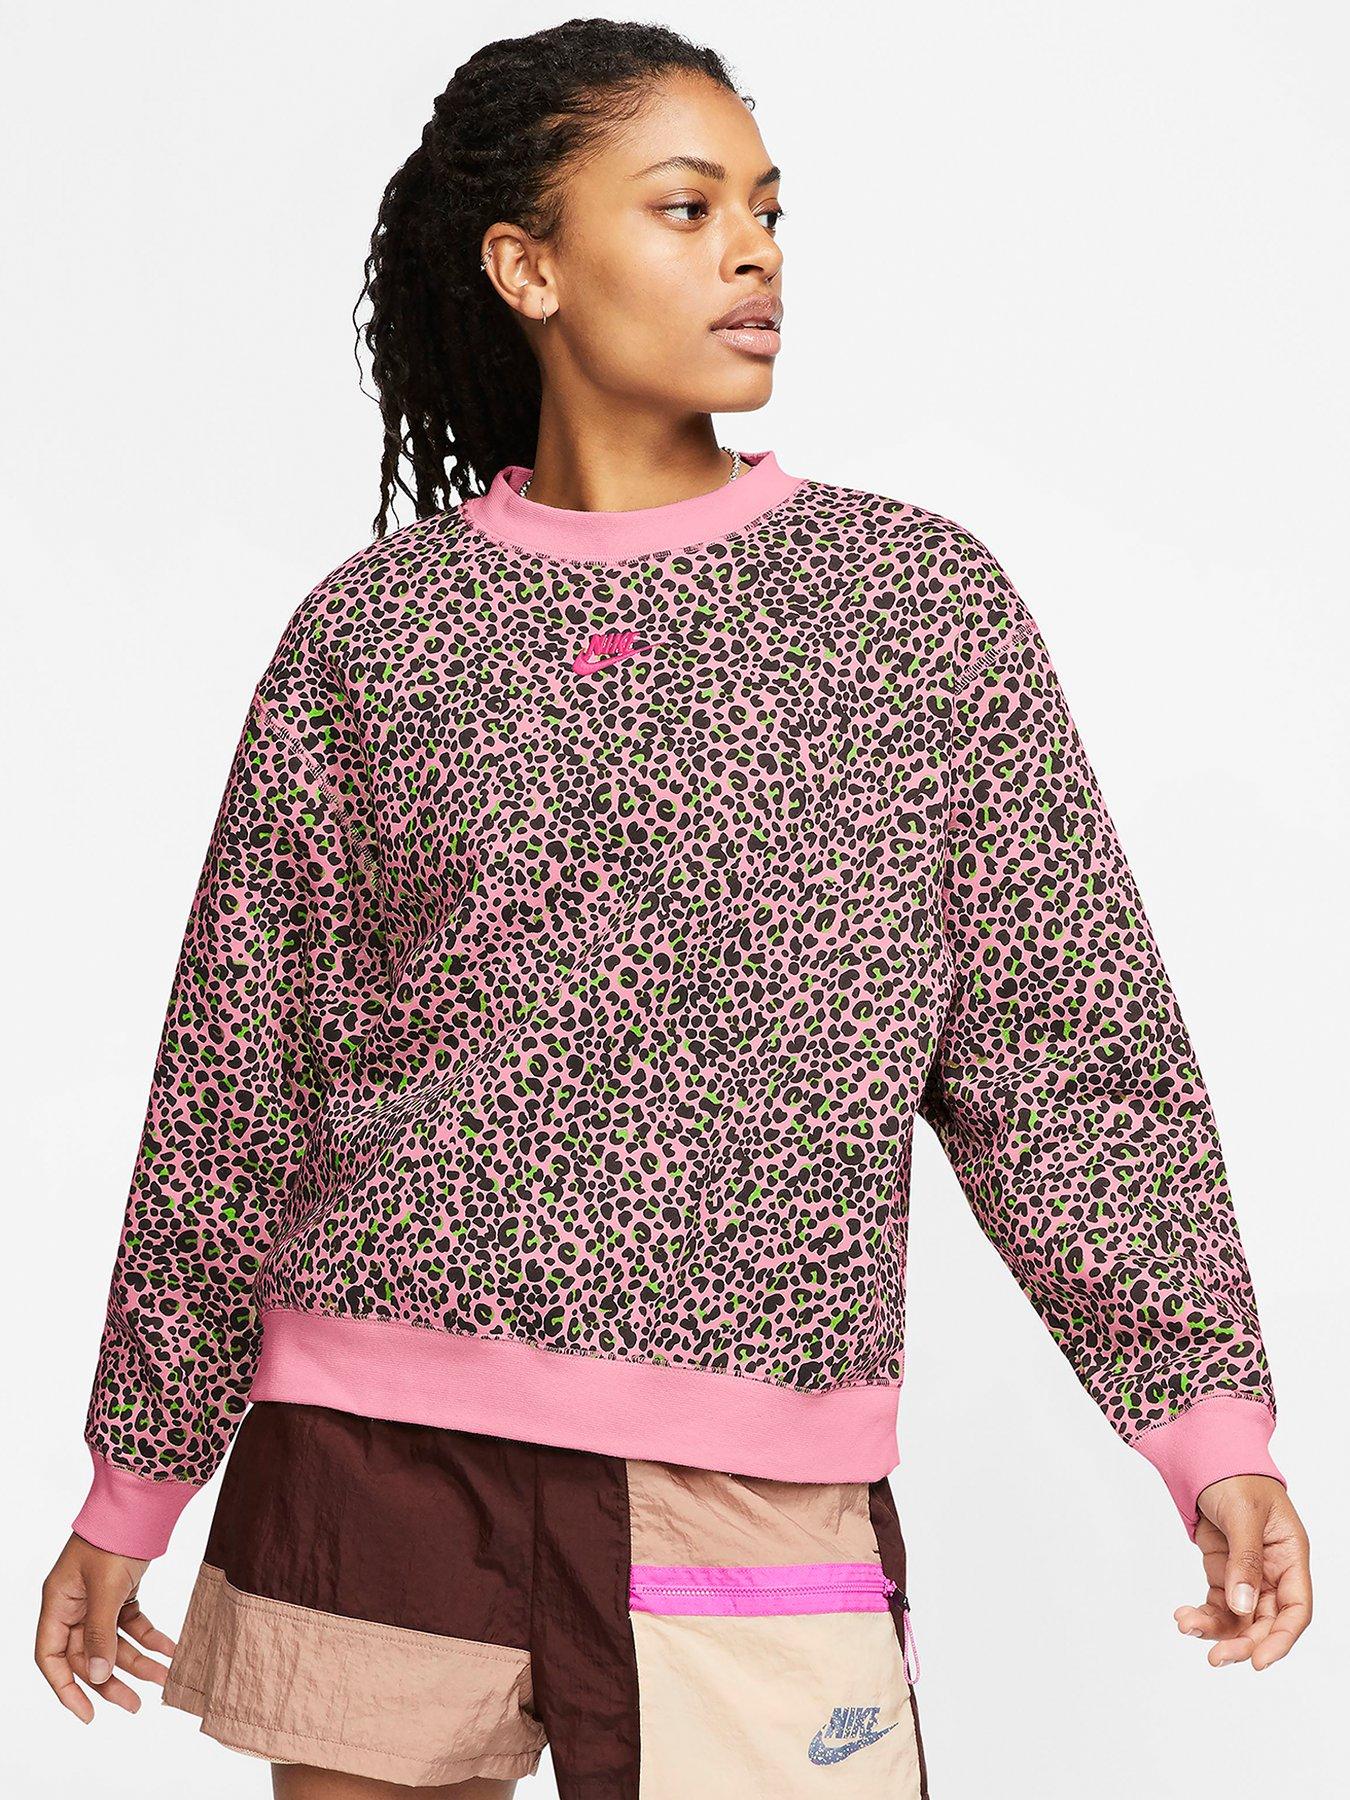 nike leopard print sweater